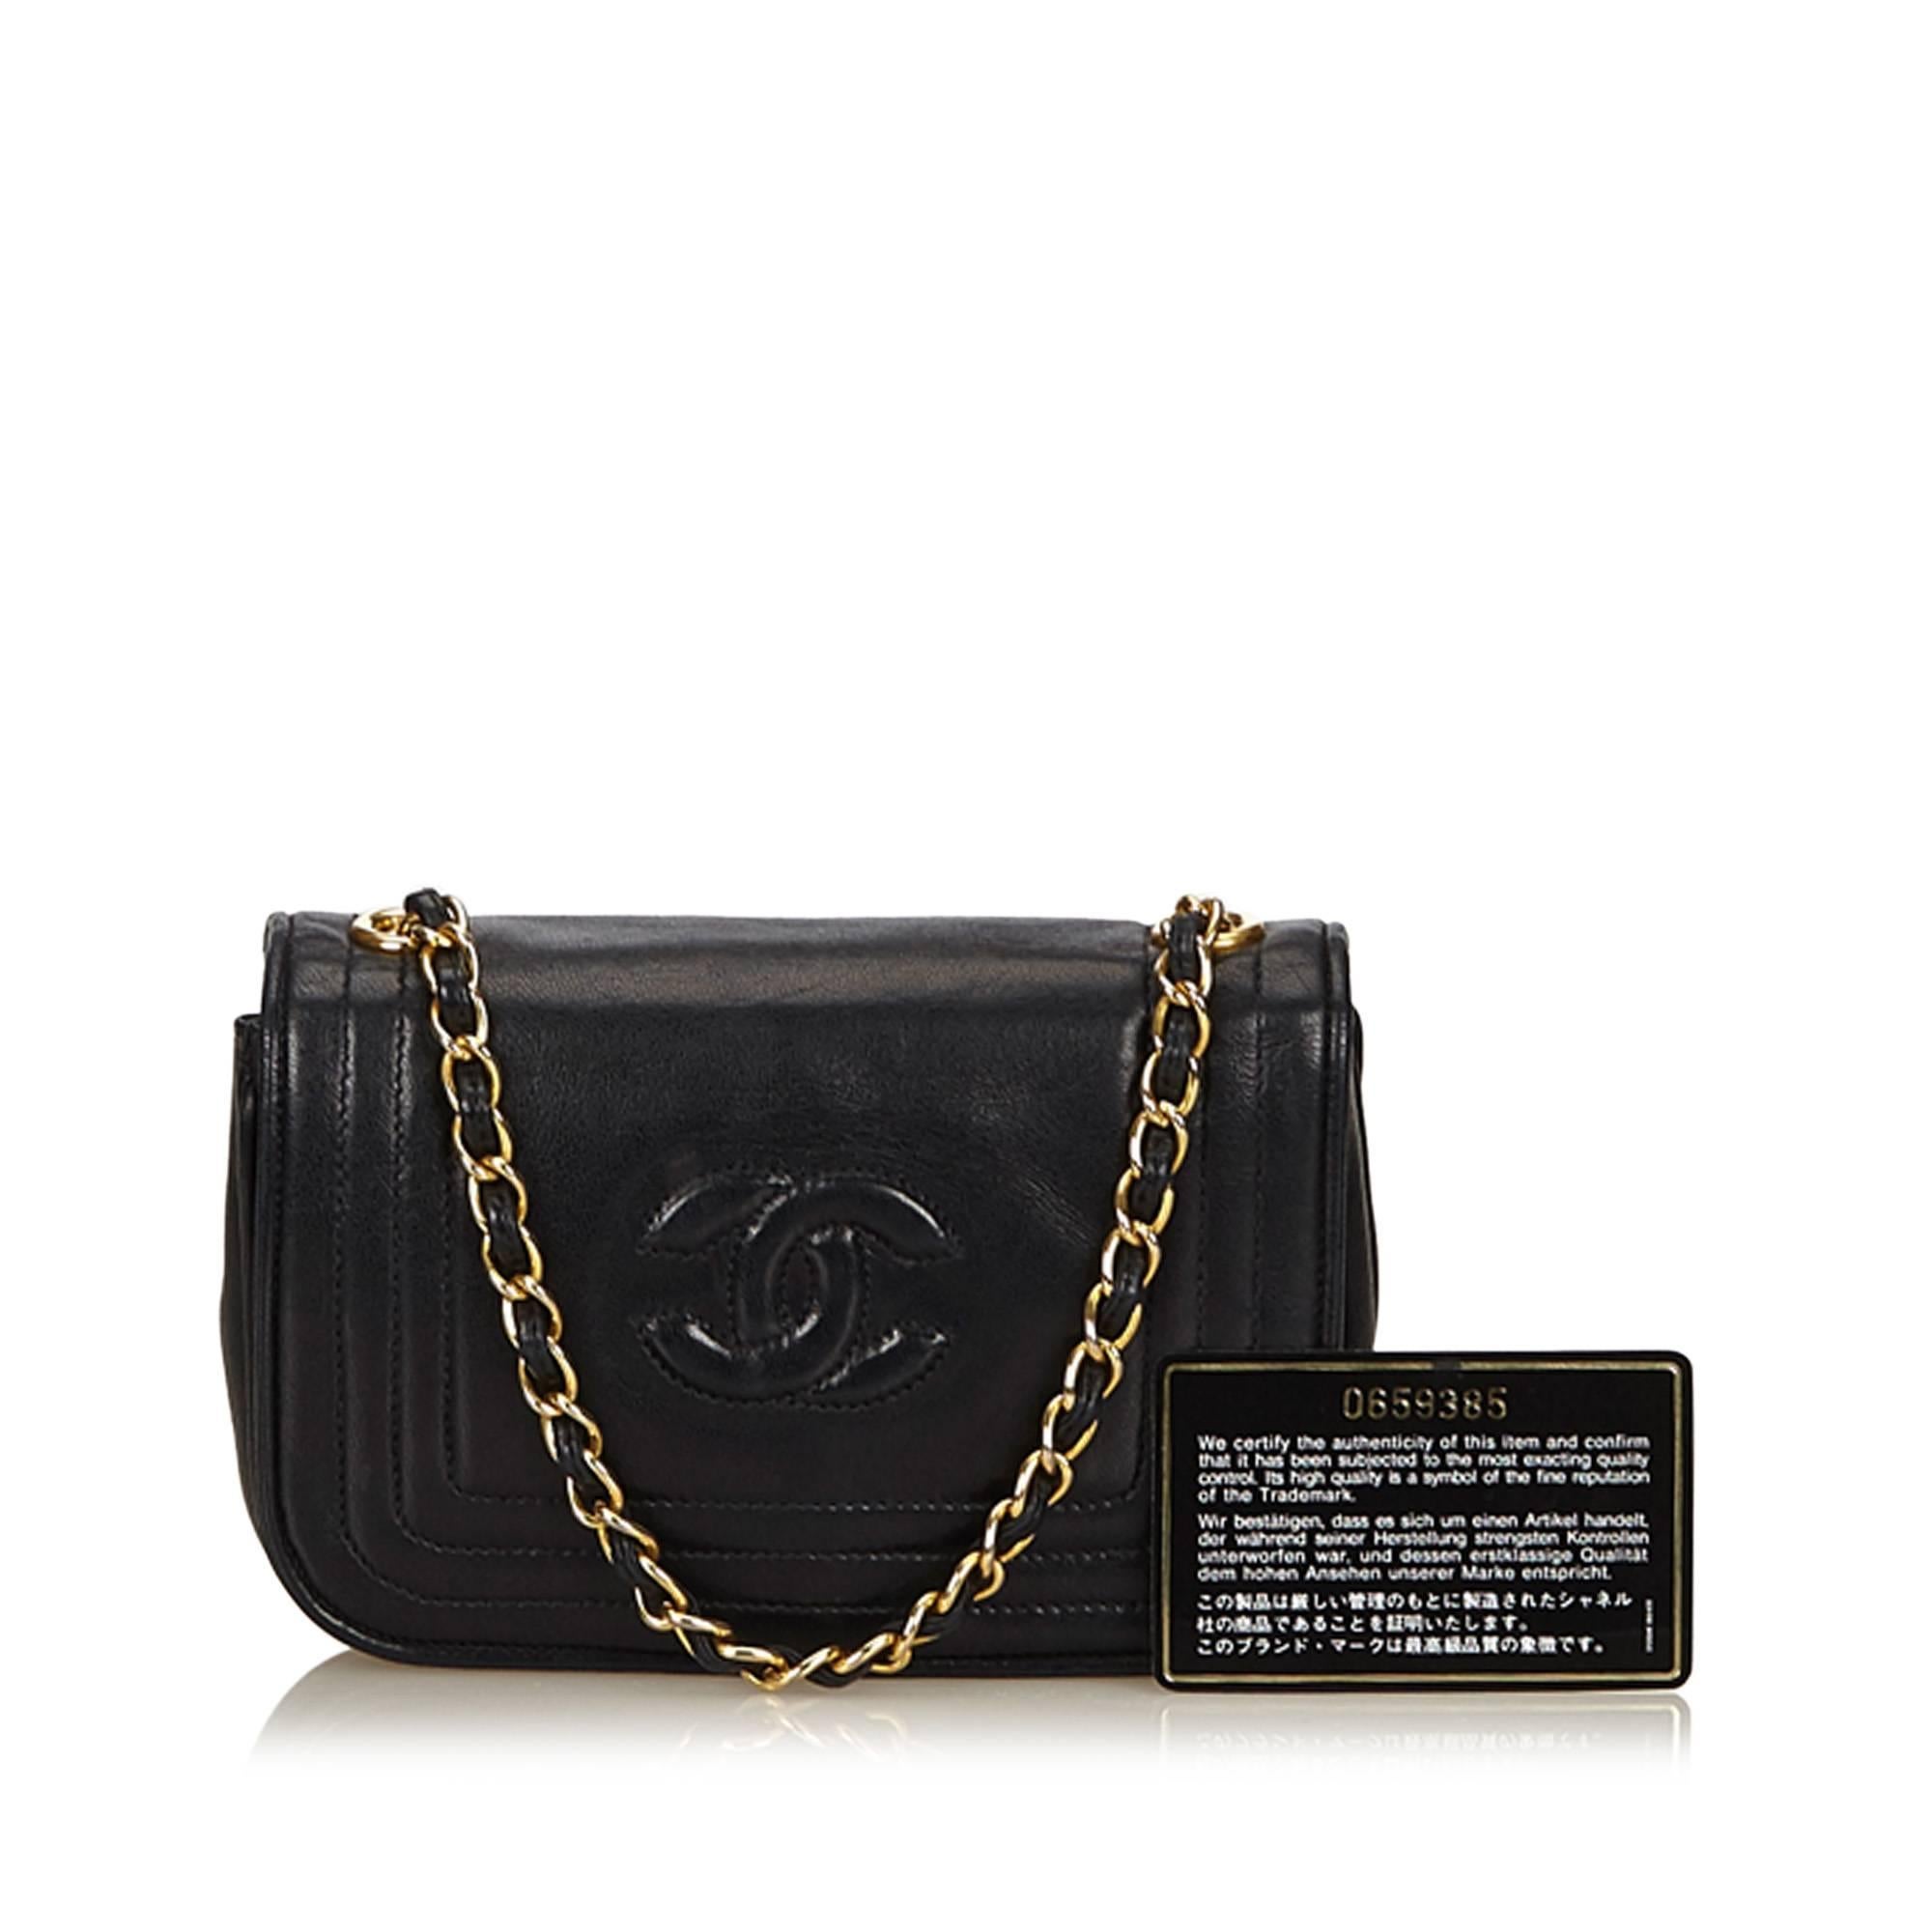 Chanel Black Lambskin Straight Stitch Details with 